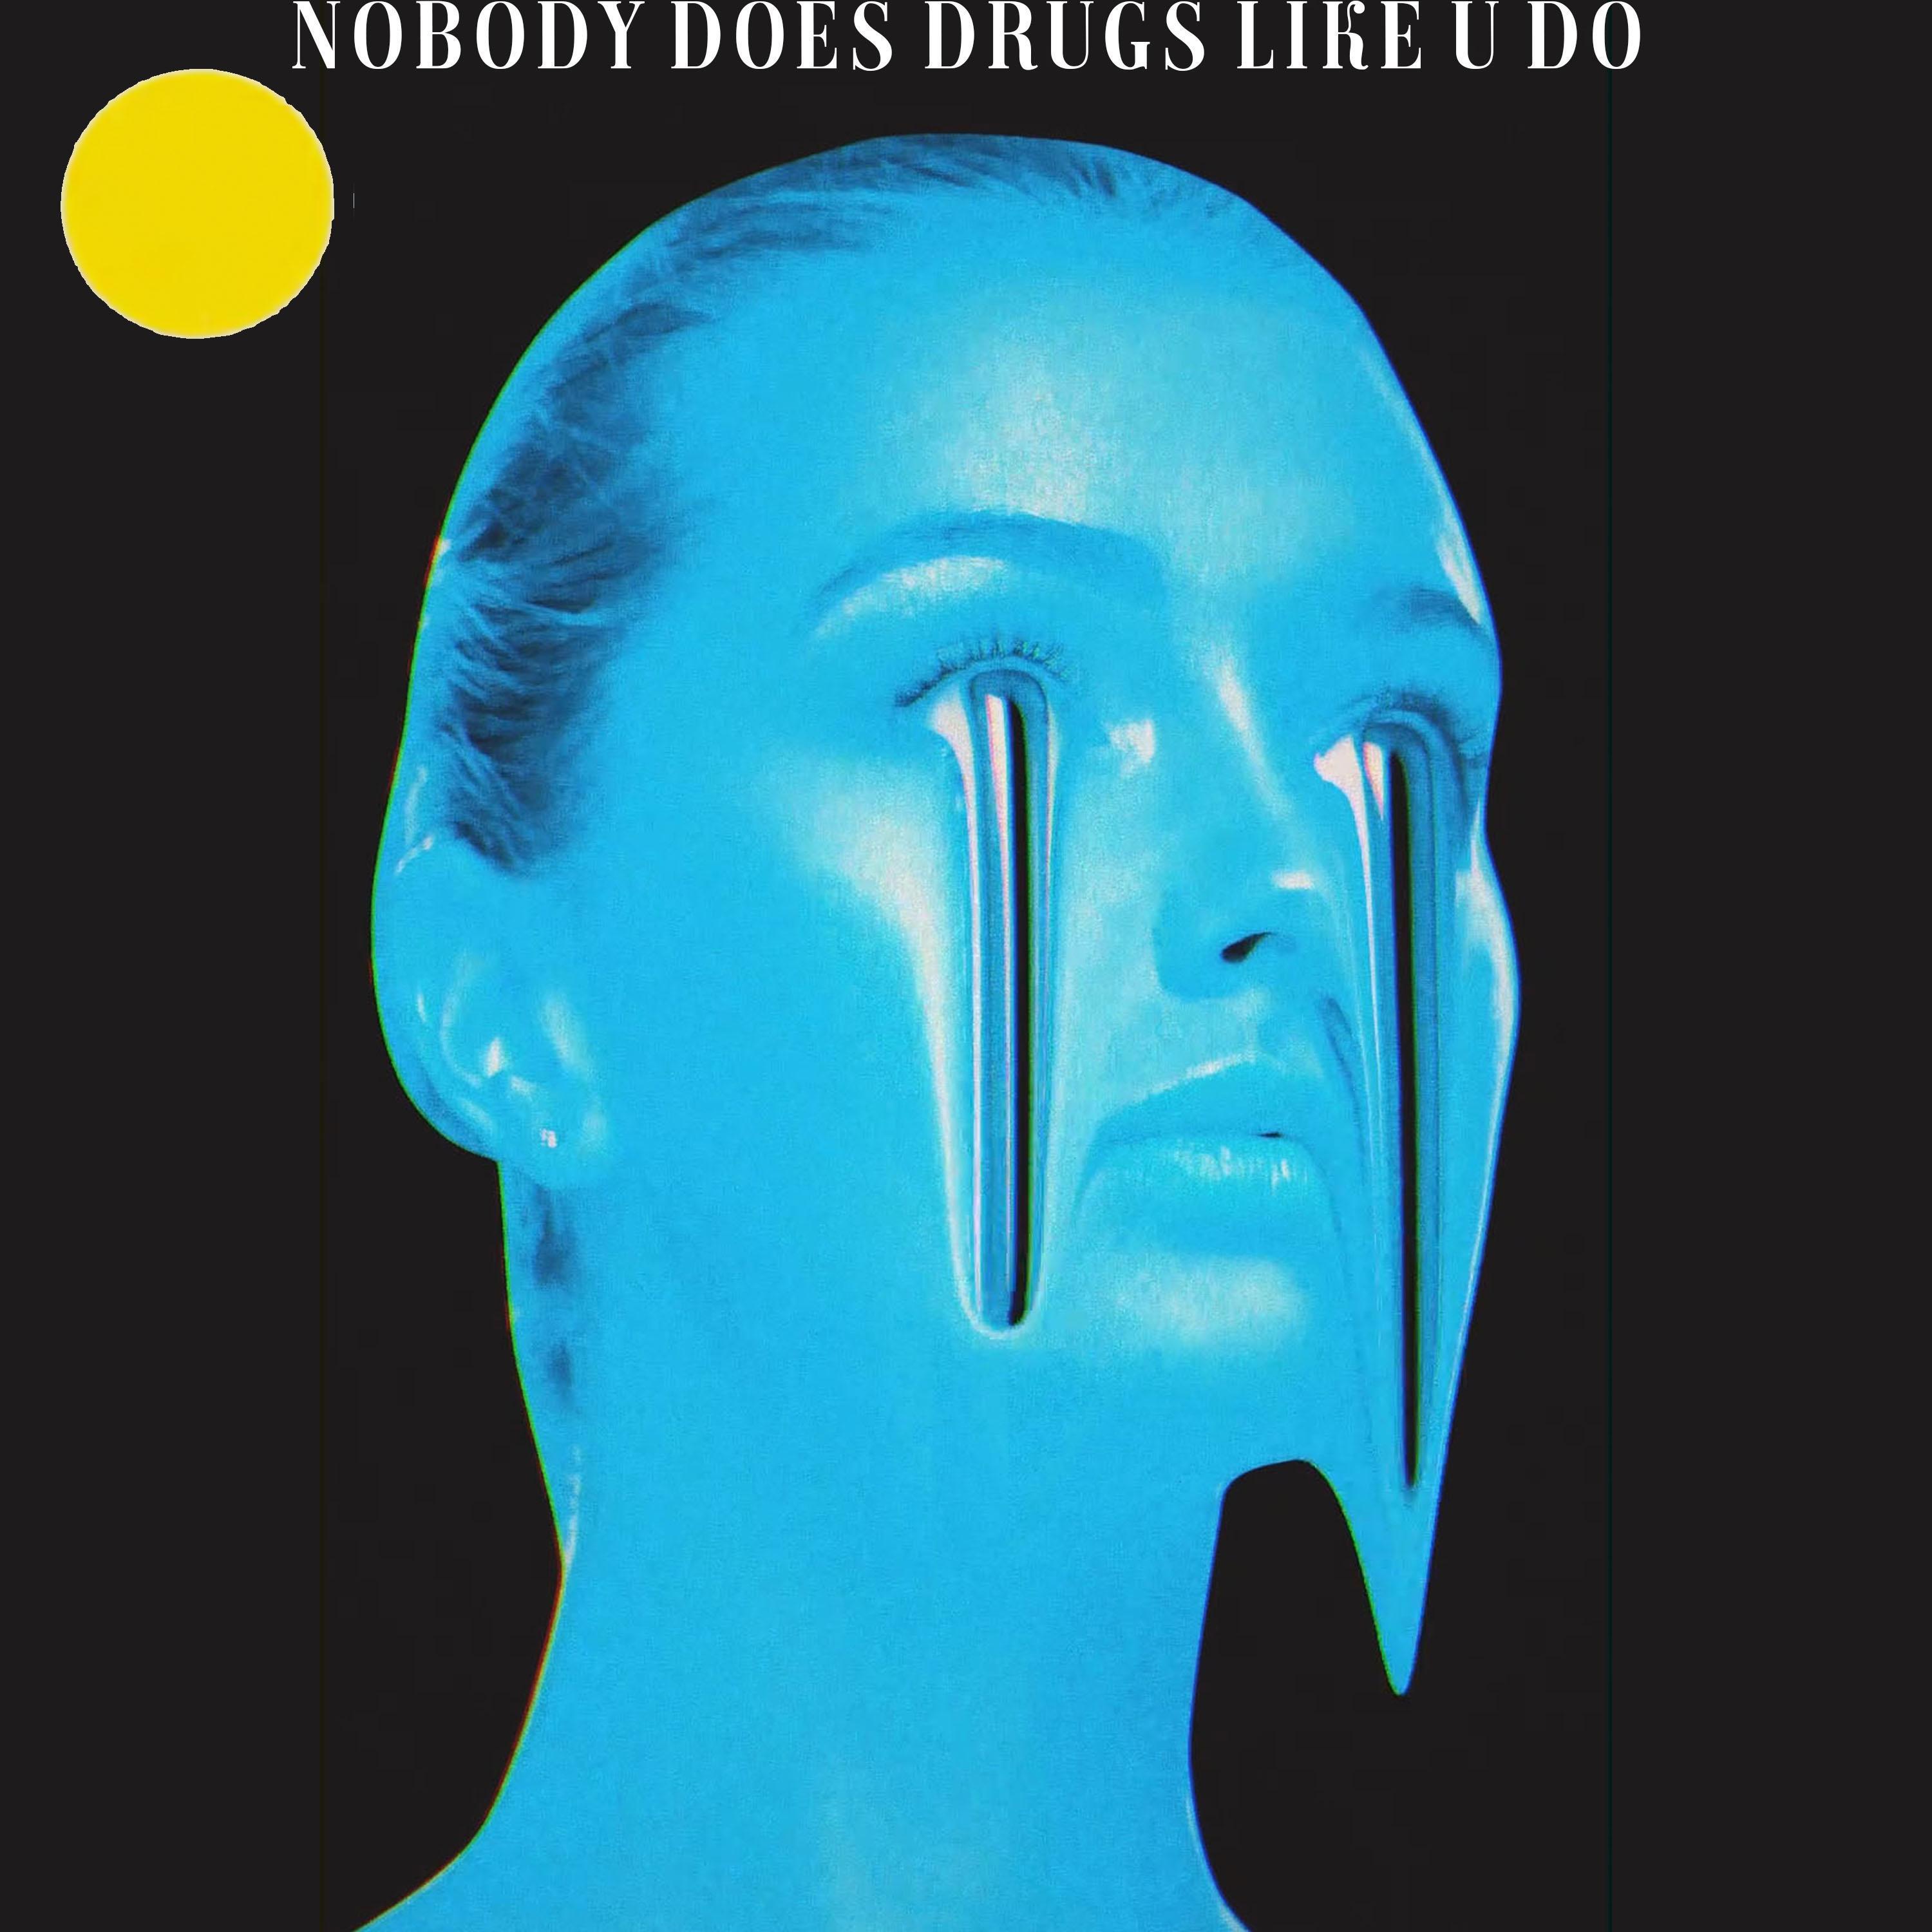 Mija - NOBODY DOES DRUGS LIKE U DO (feat. DEEGAN)